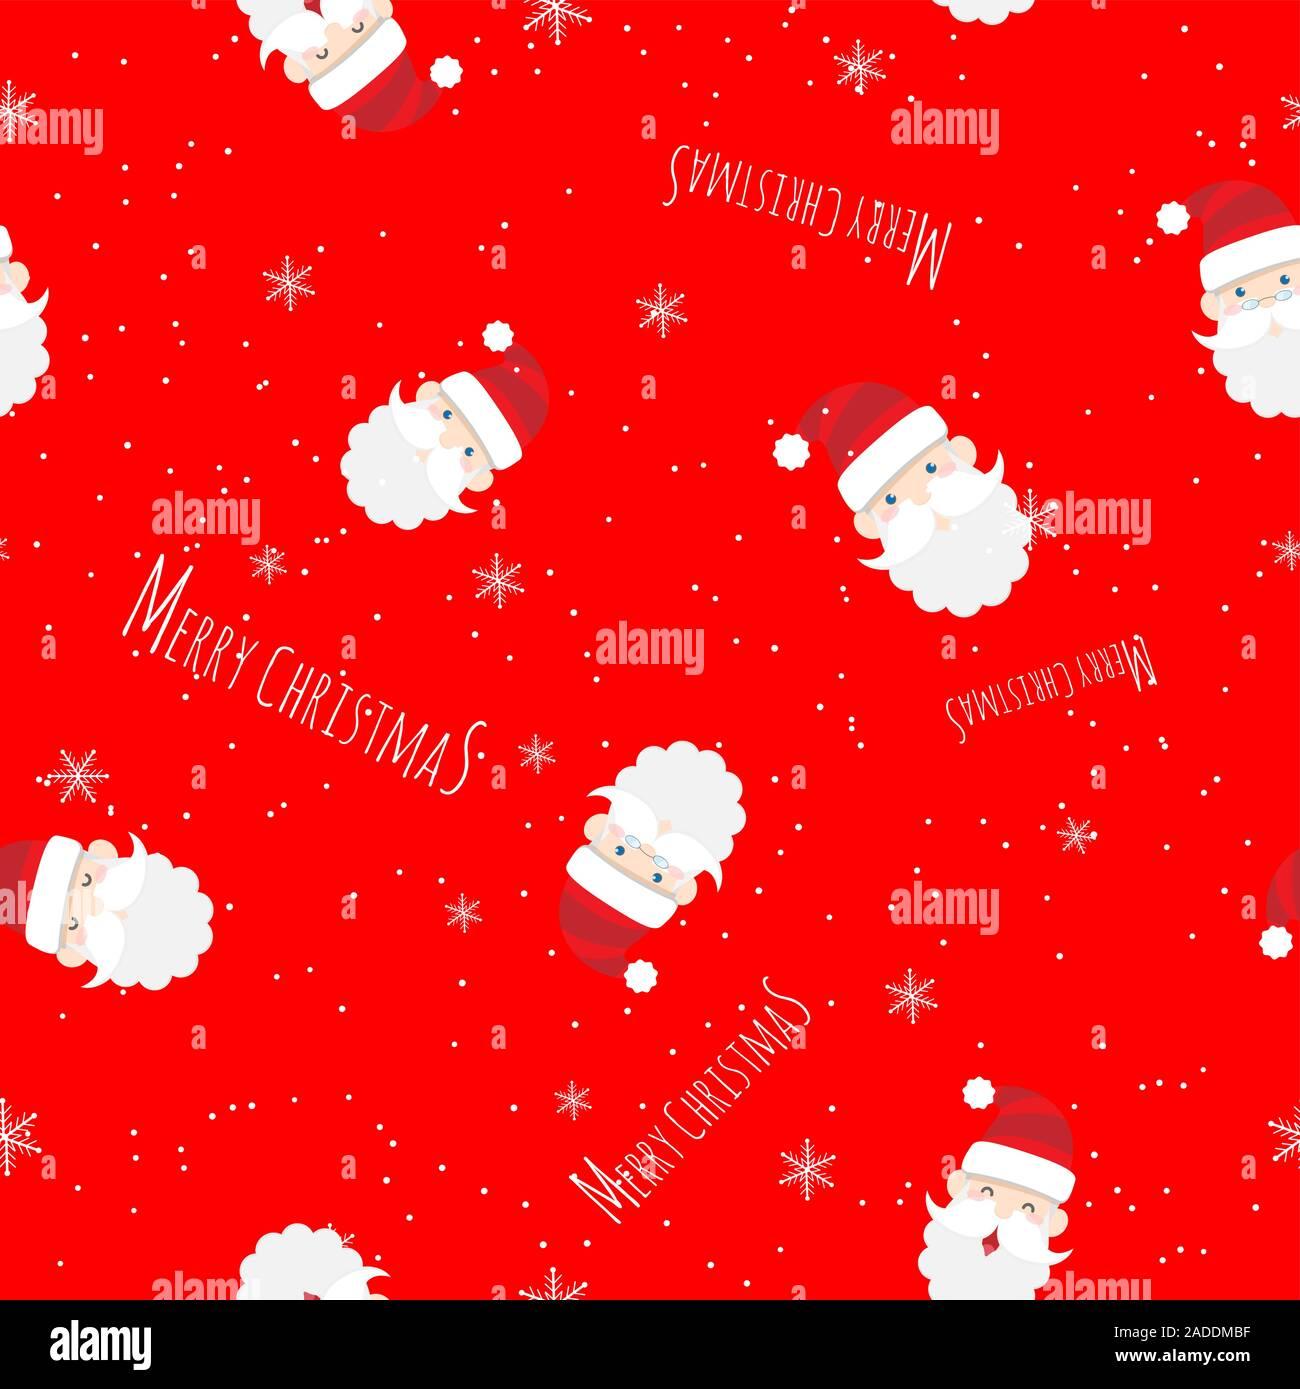 vector seamless cute Santa Claus cartoon with text Merry Christmas